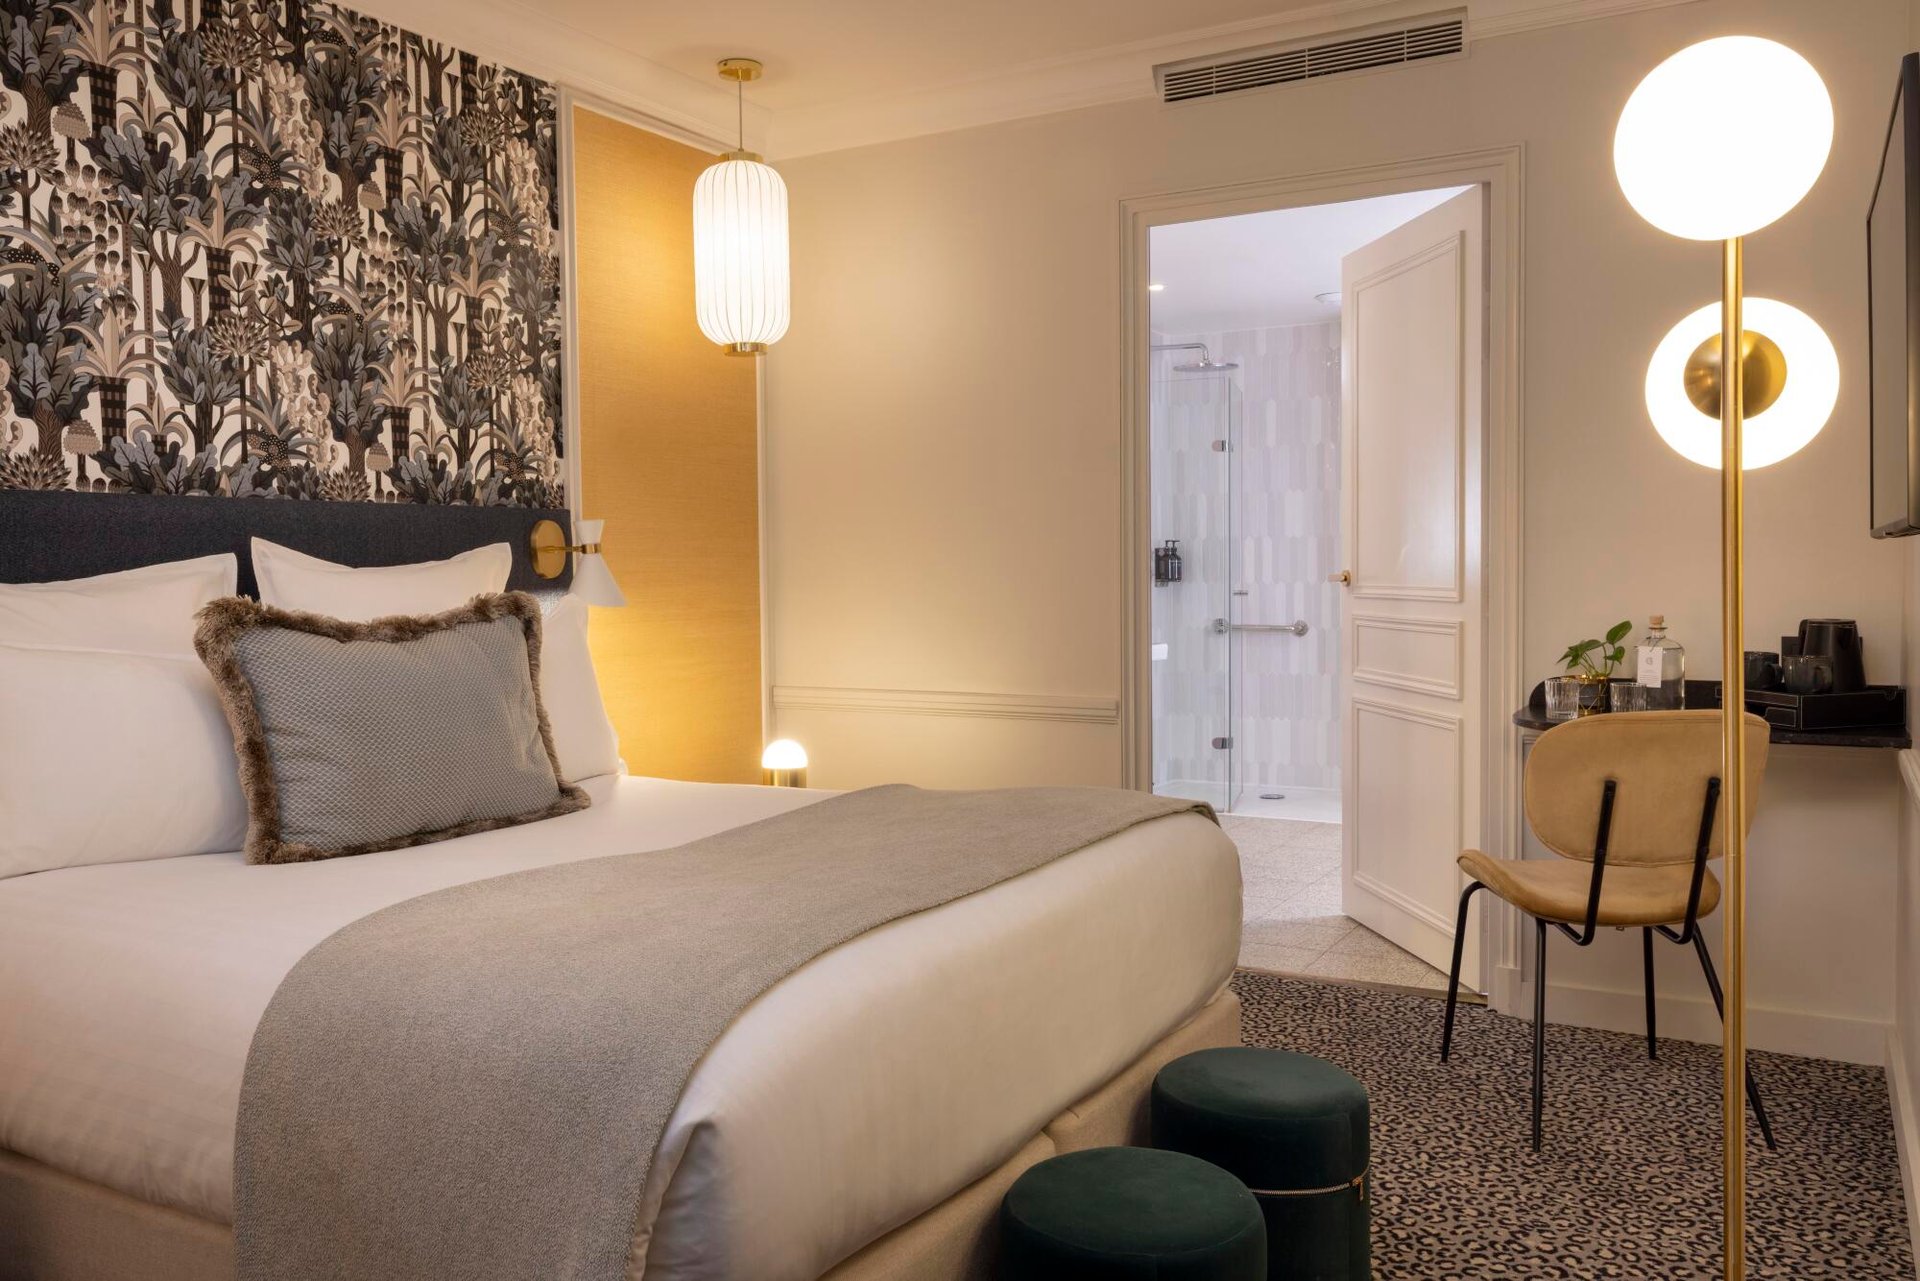 Hotel Gramont Paris, Cosy Bedroom, single room on ground floor